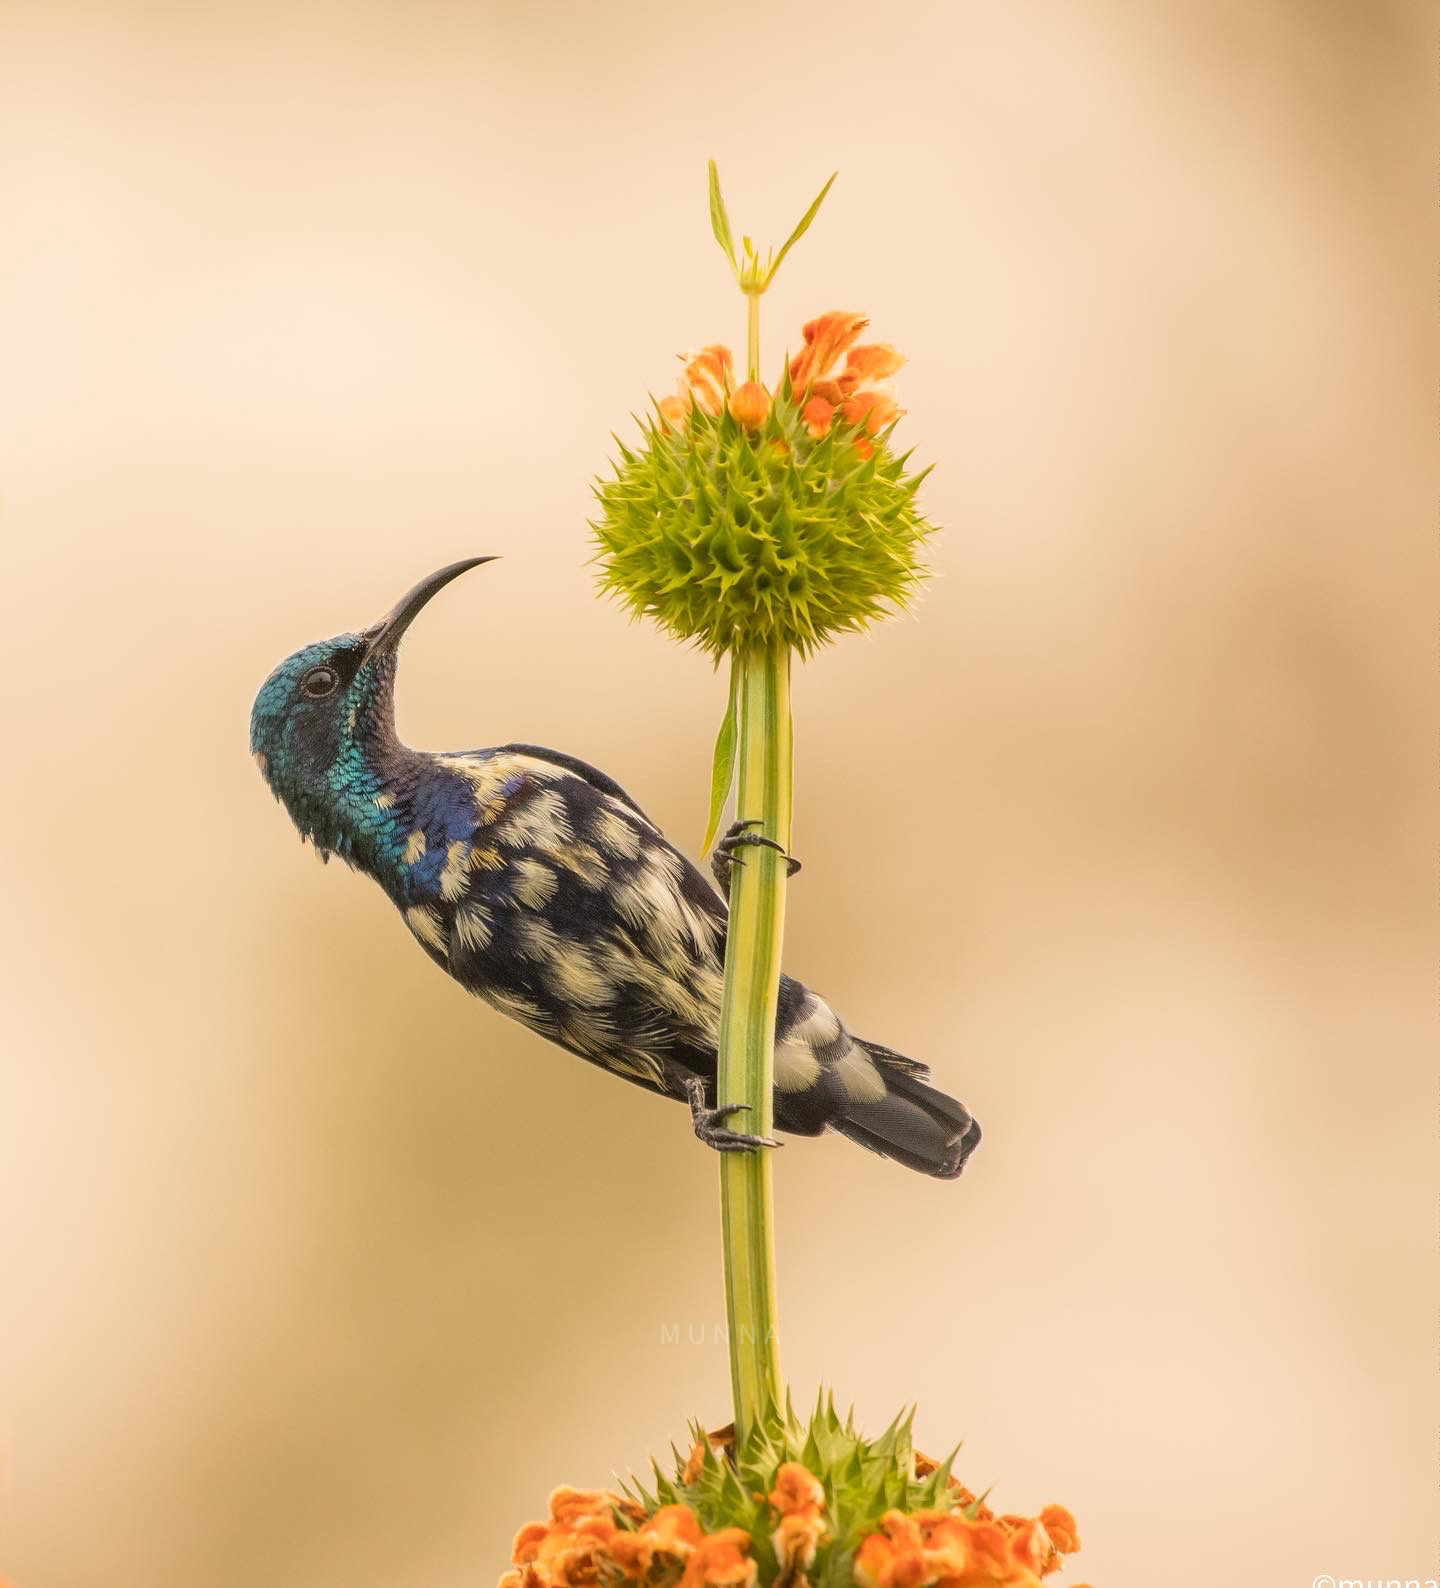 Check out increasing flora, fauna of Telangana through this wildlife photographer’s lens